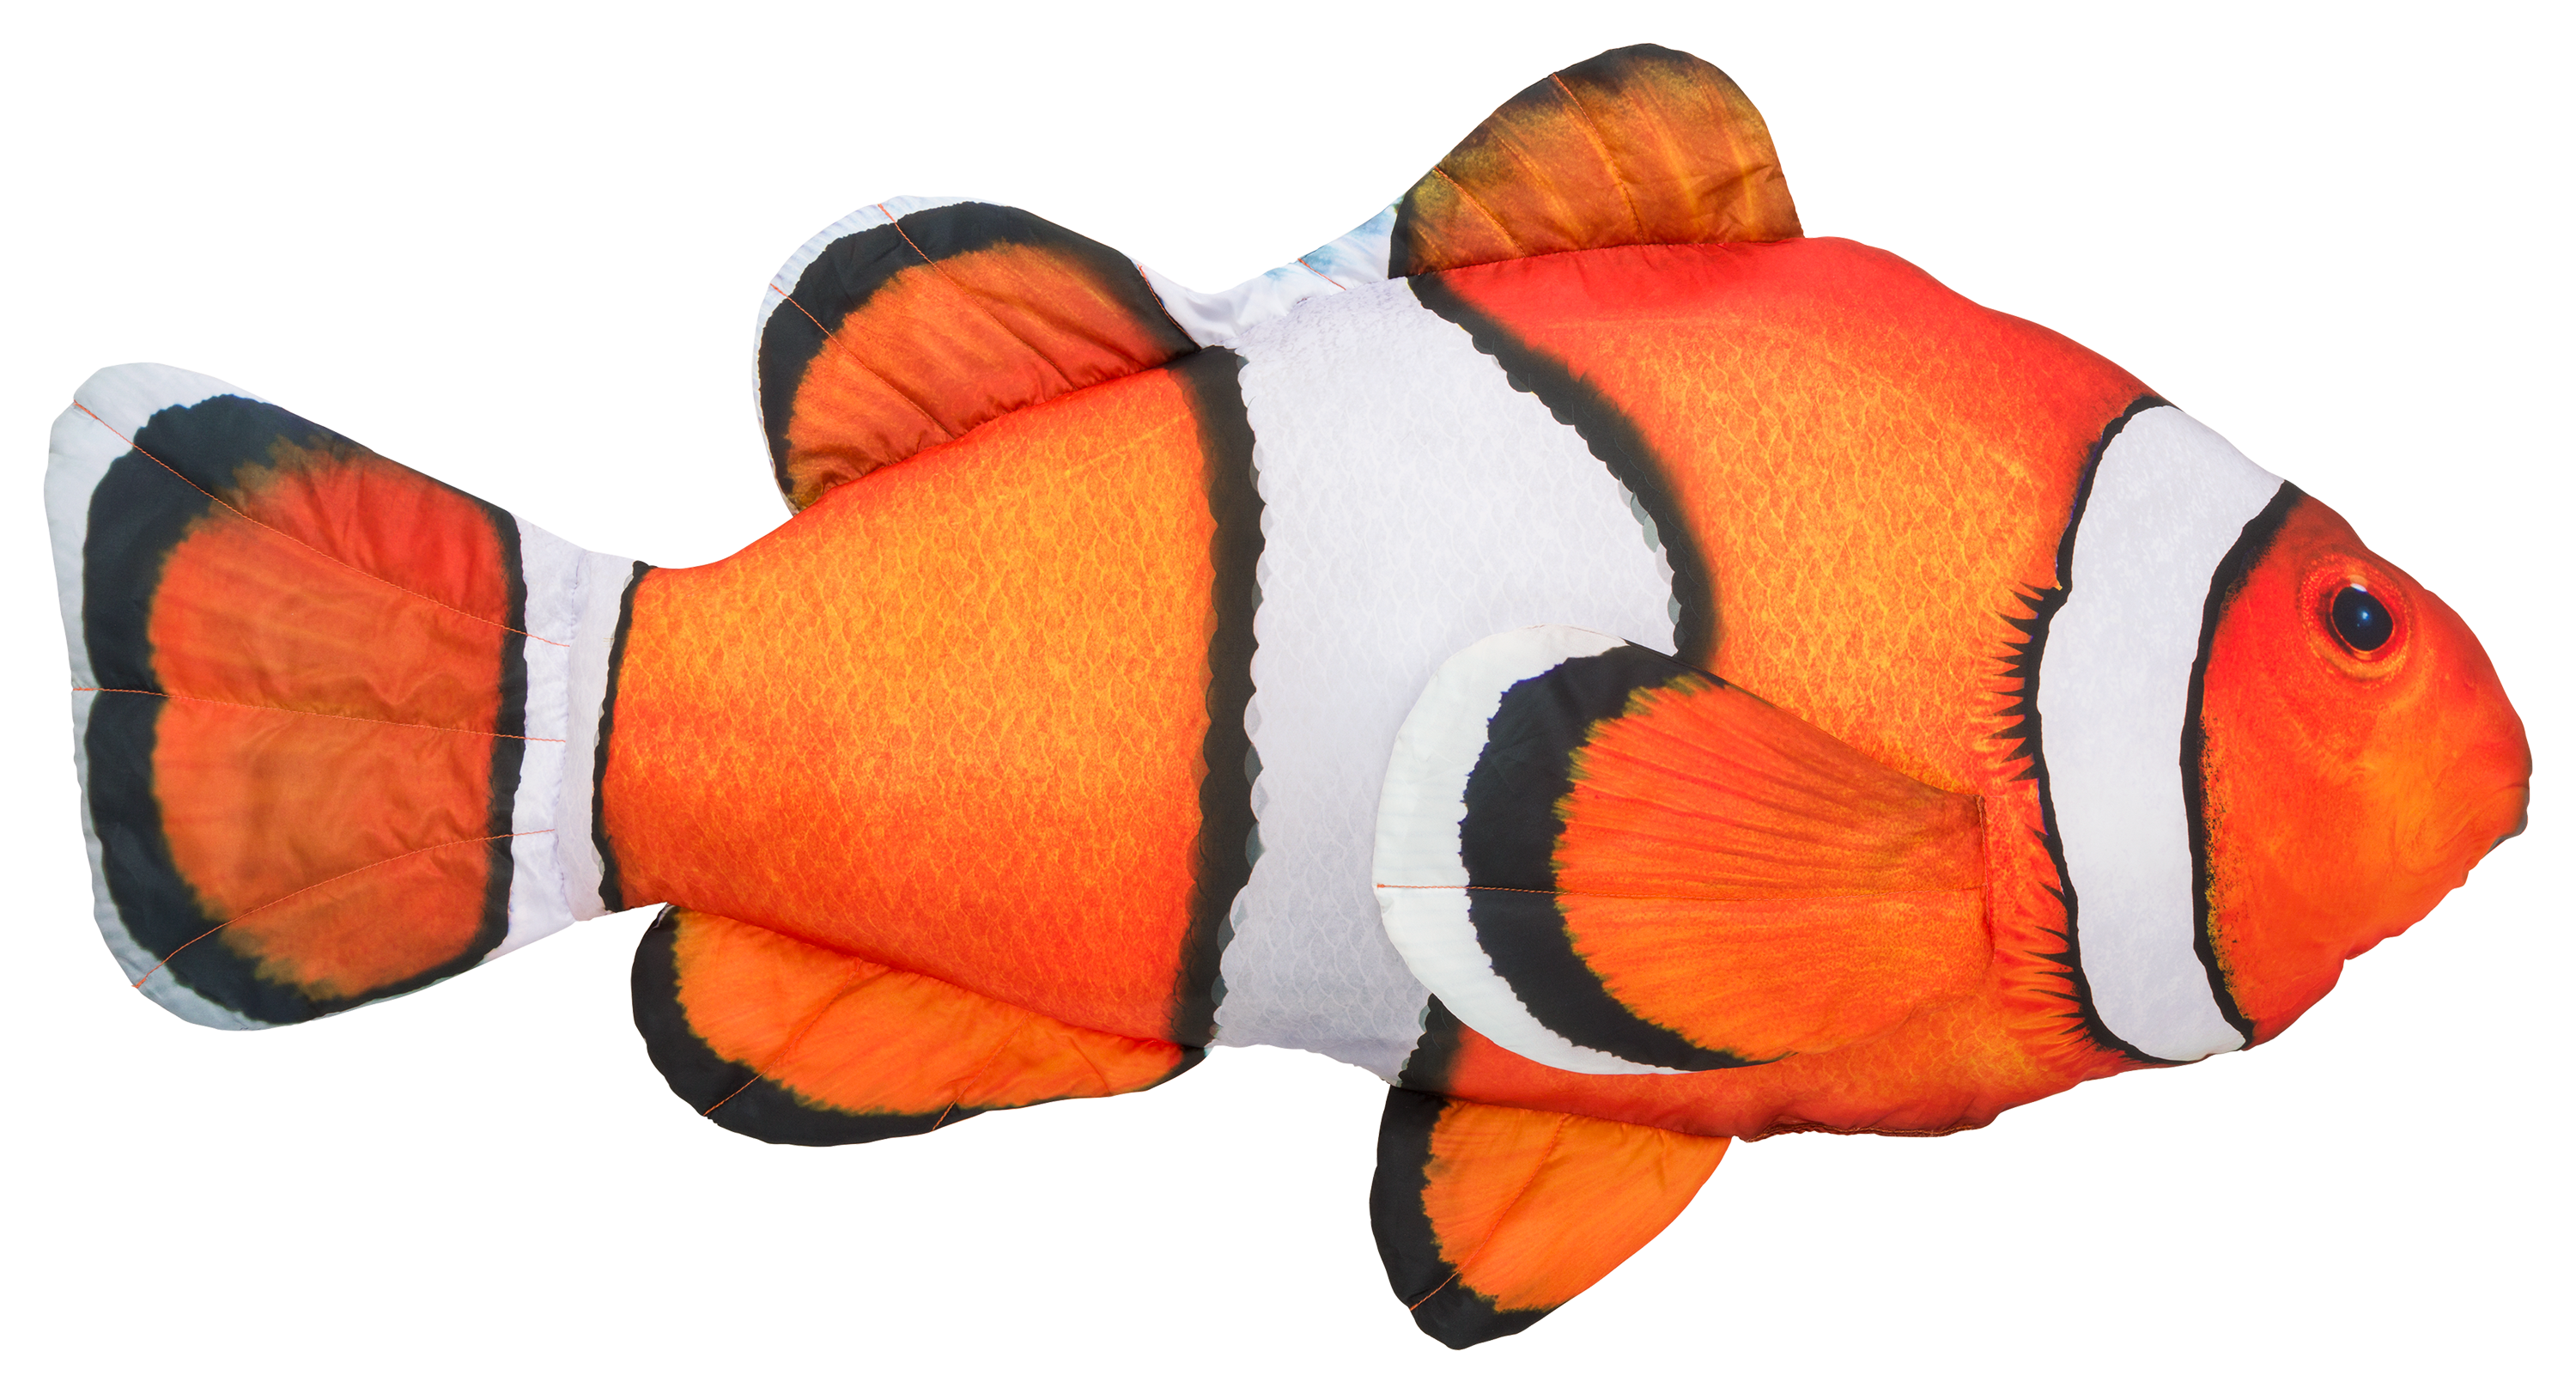 Bass Pro Shops Giant Stuffed Clownfish for Kids